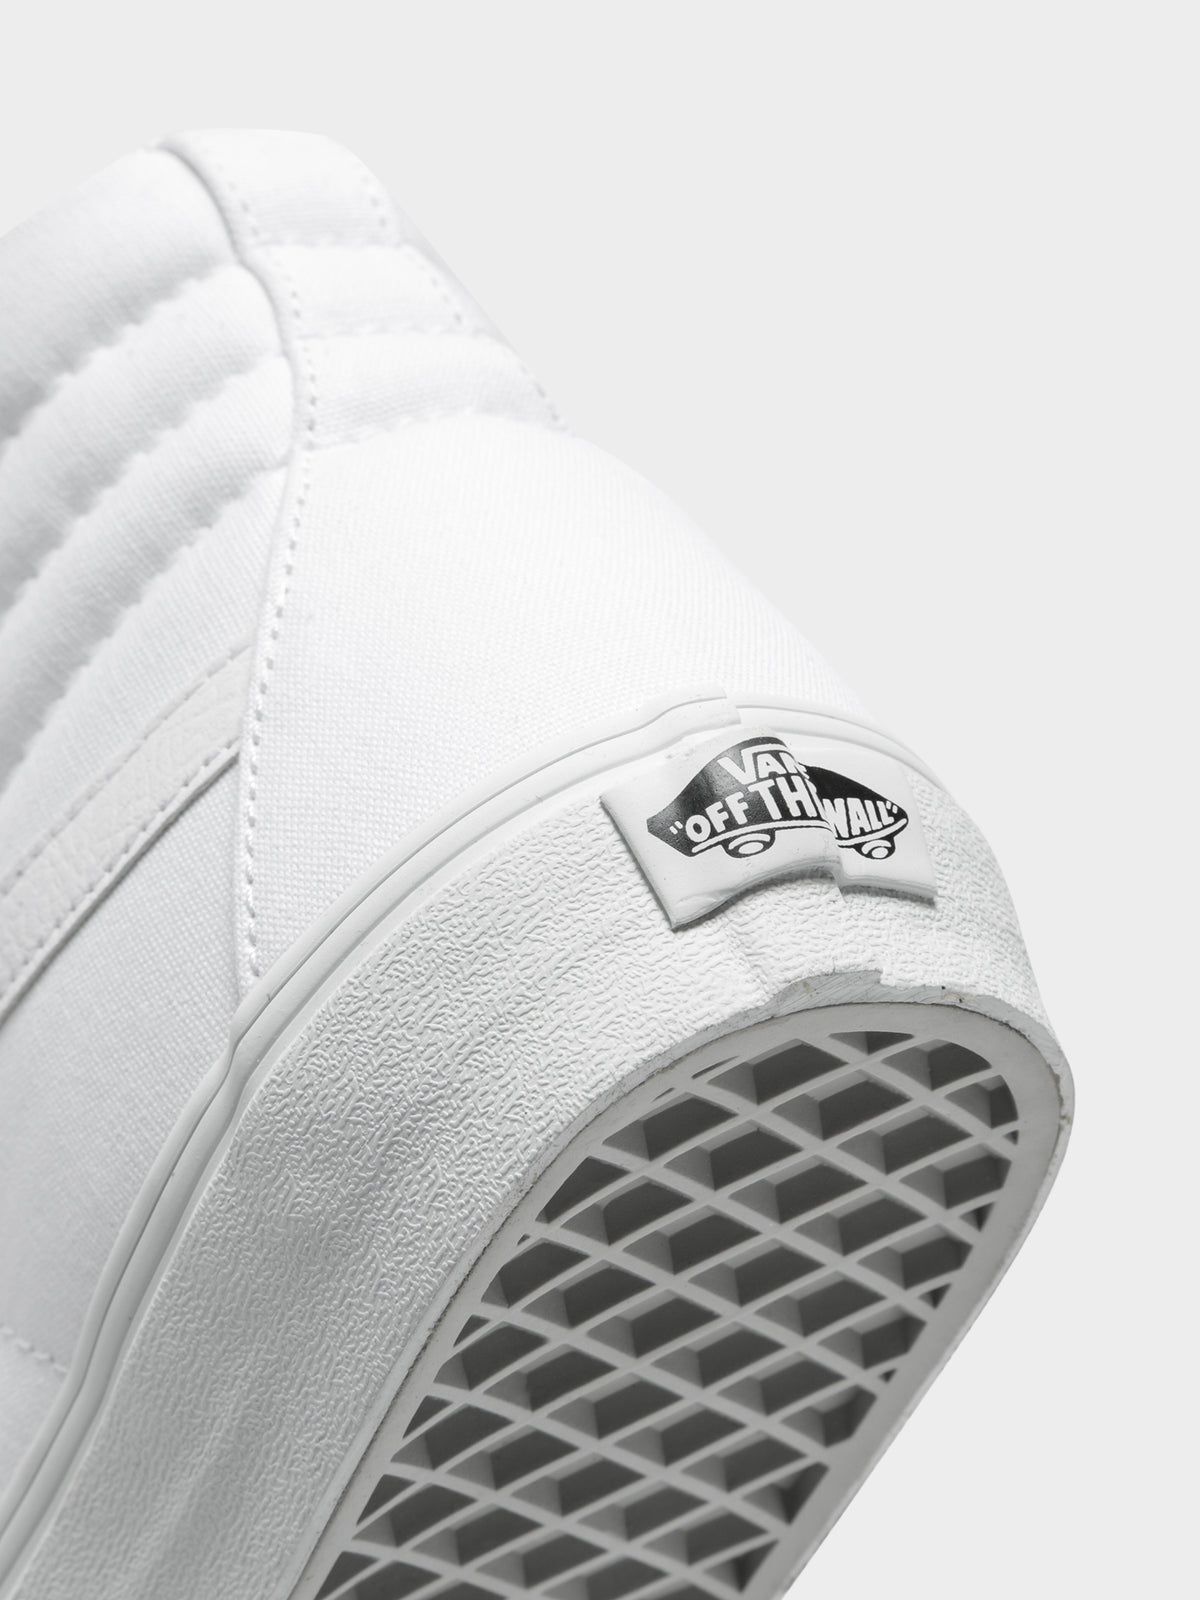 Unisex SK8 Hi Sneakers in White